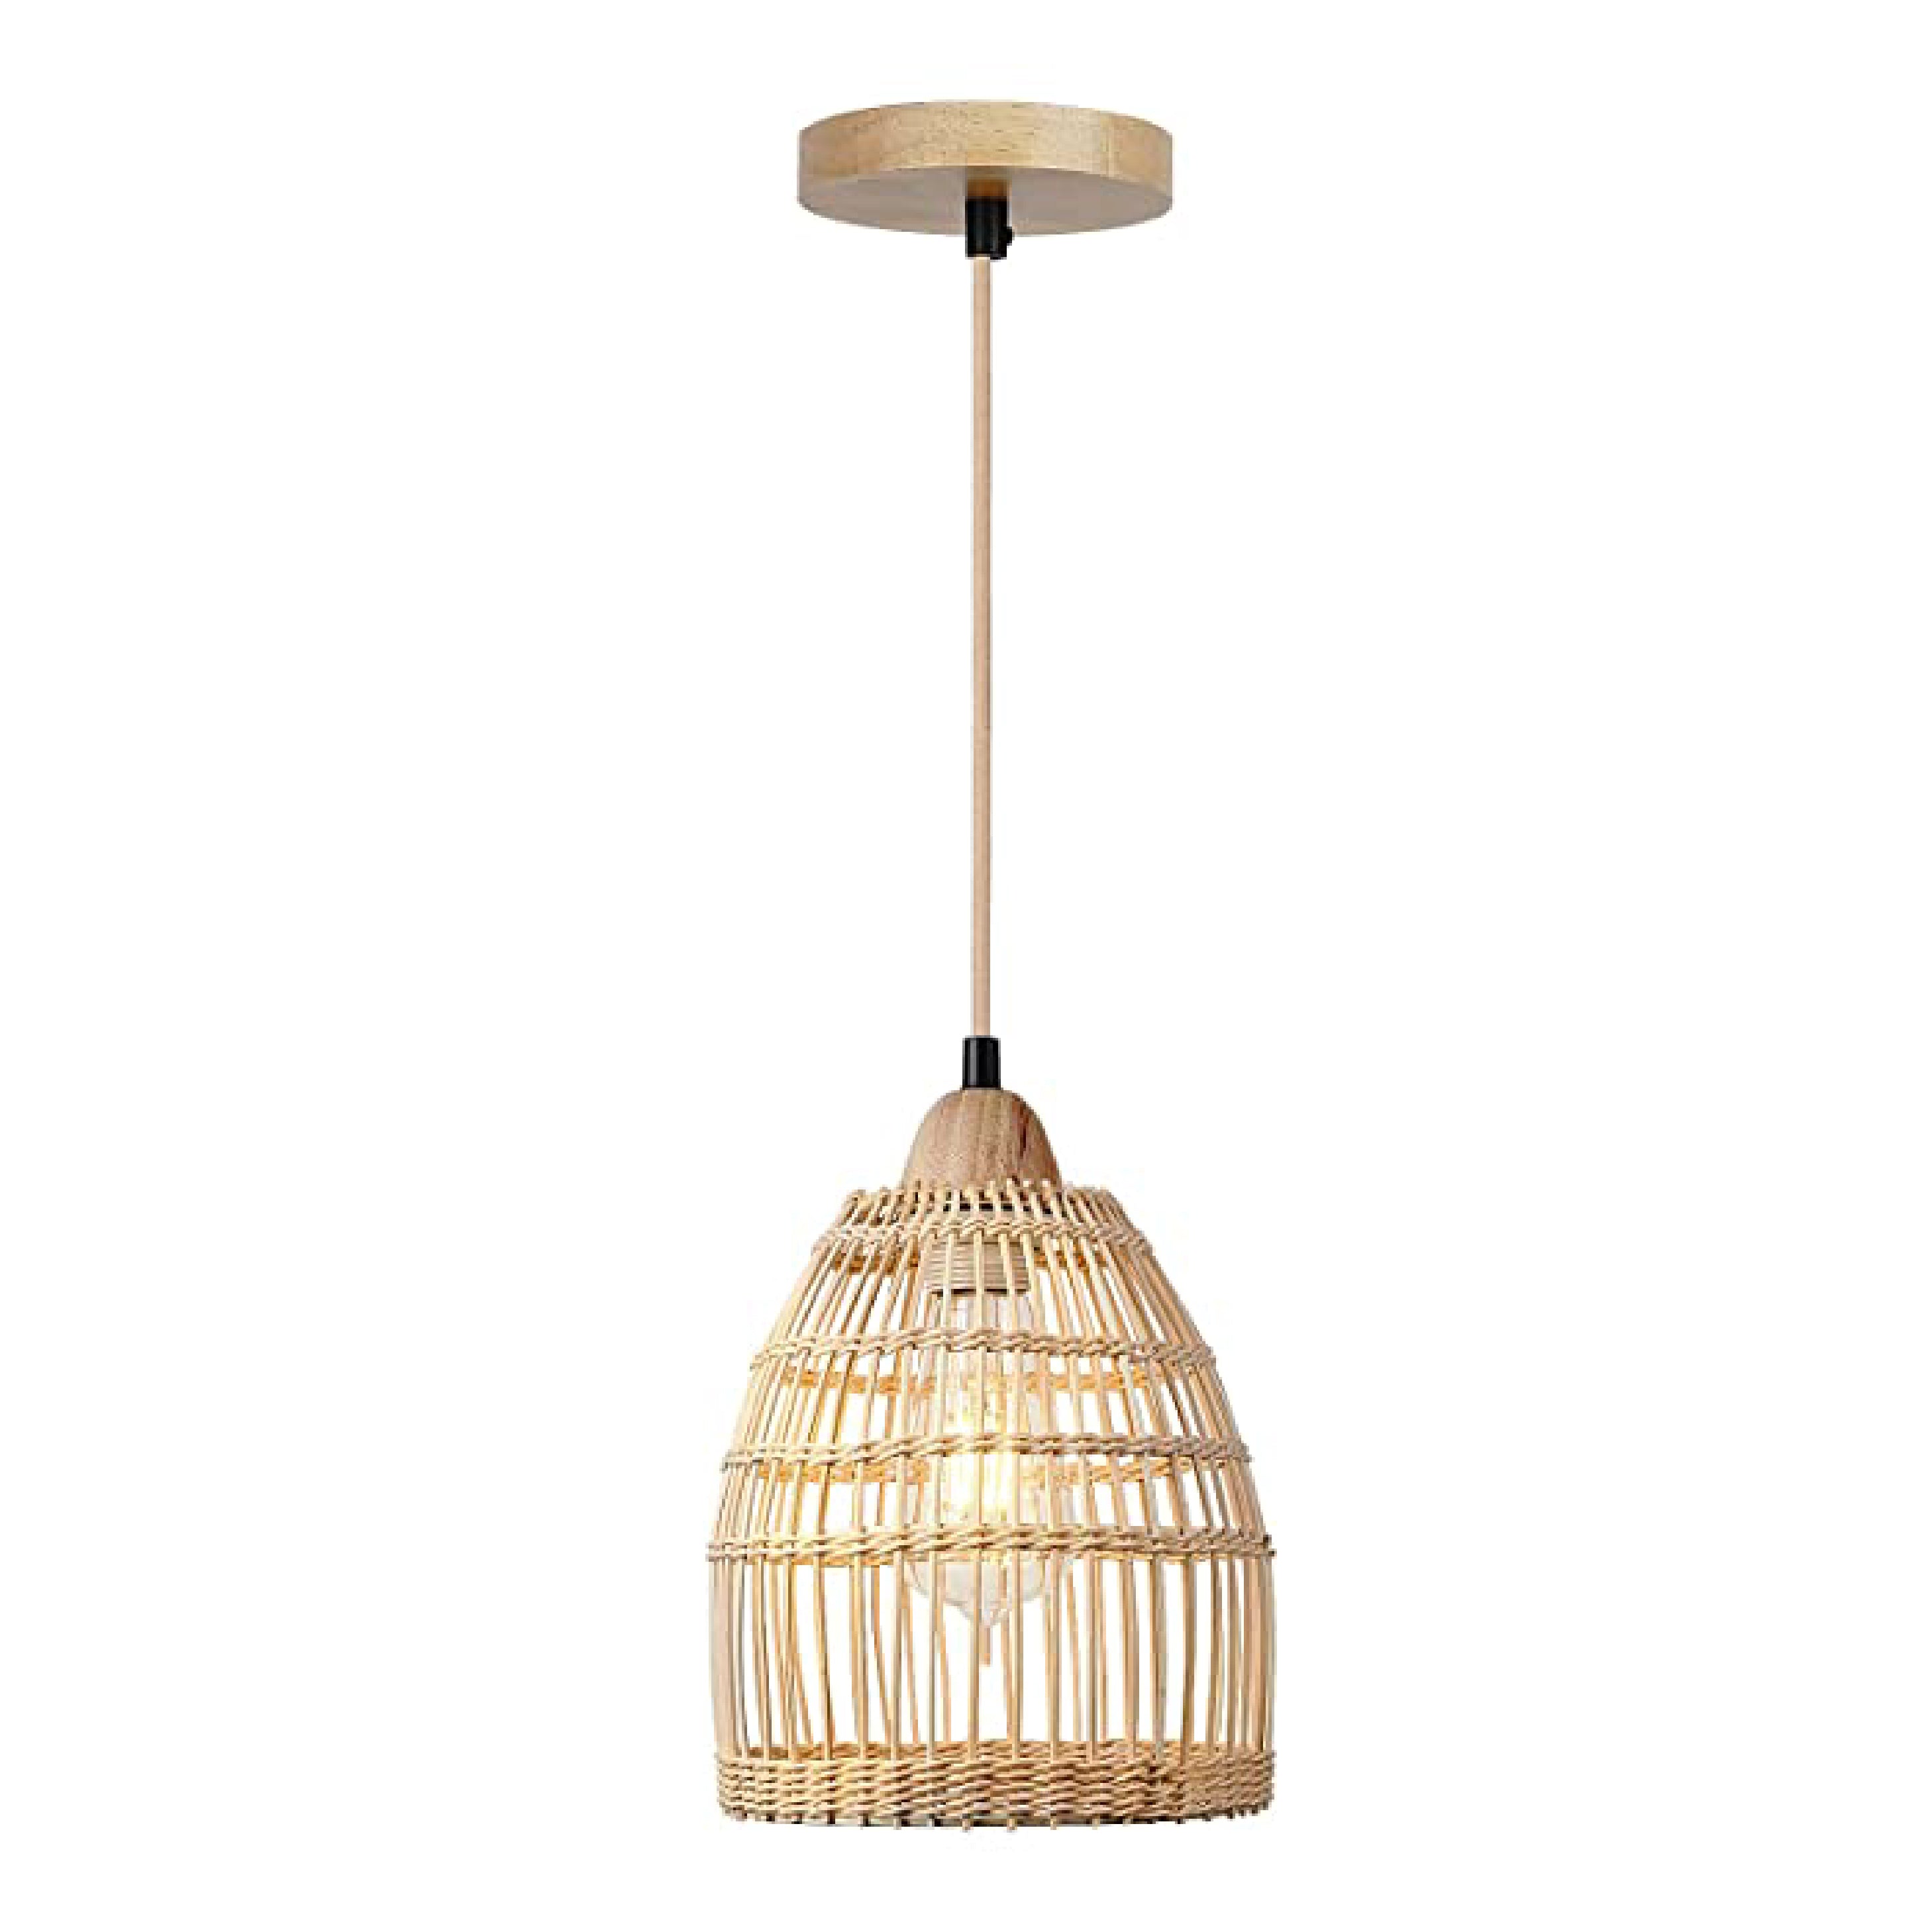 Rattan boho lamp shade 1light pendant light Farmhouse bamboo light fixture